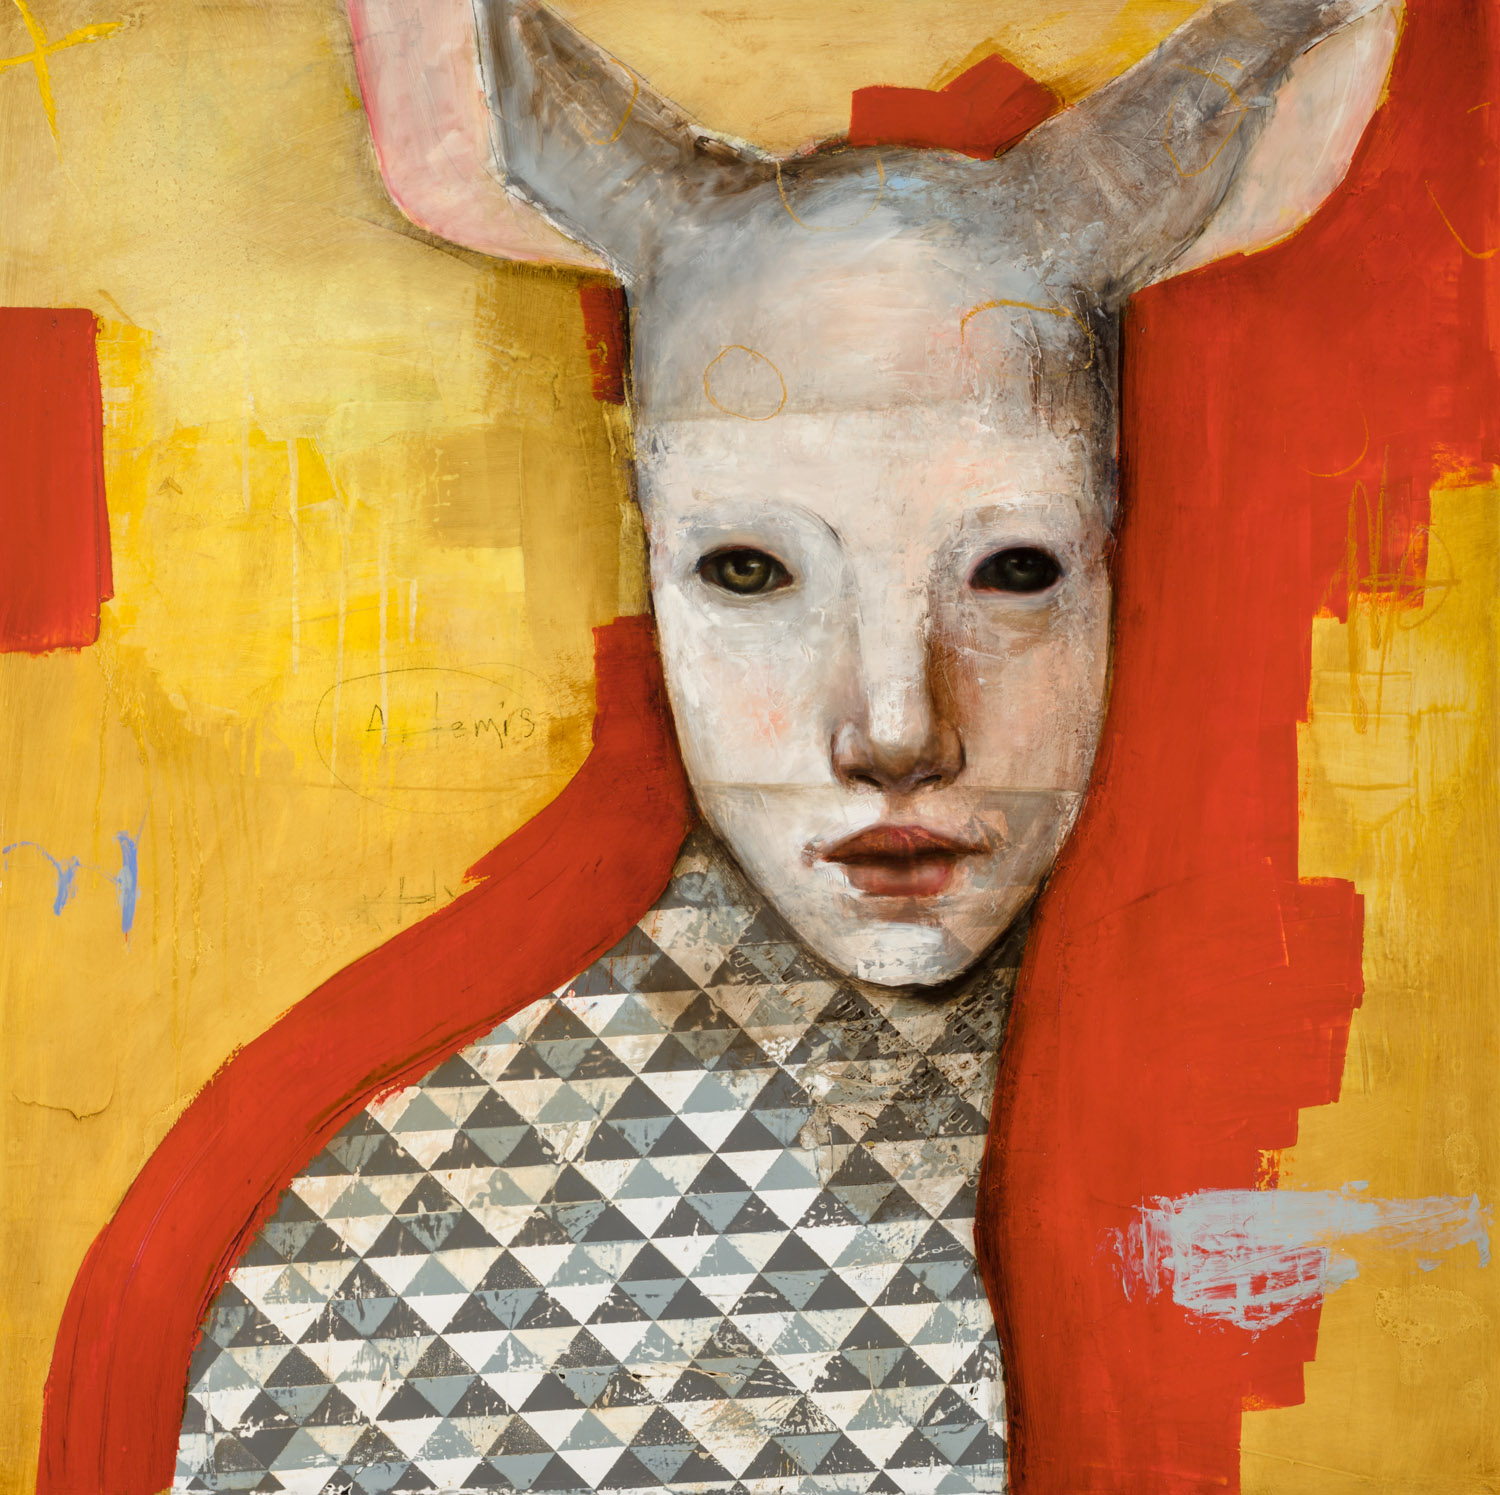   Artemis  - Oil on canvas - 40” x 40” / 102 x 102 cm 